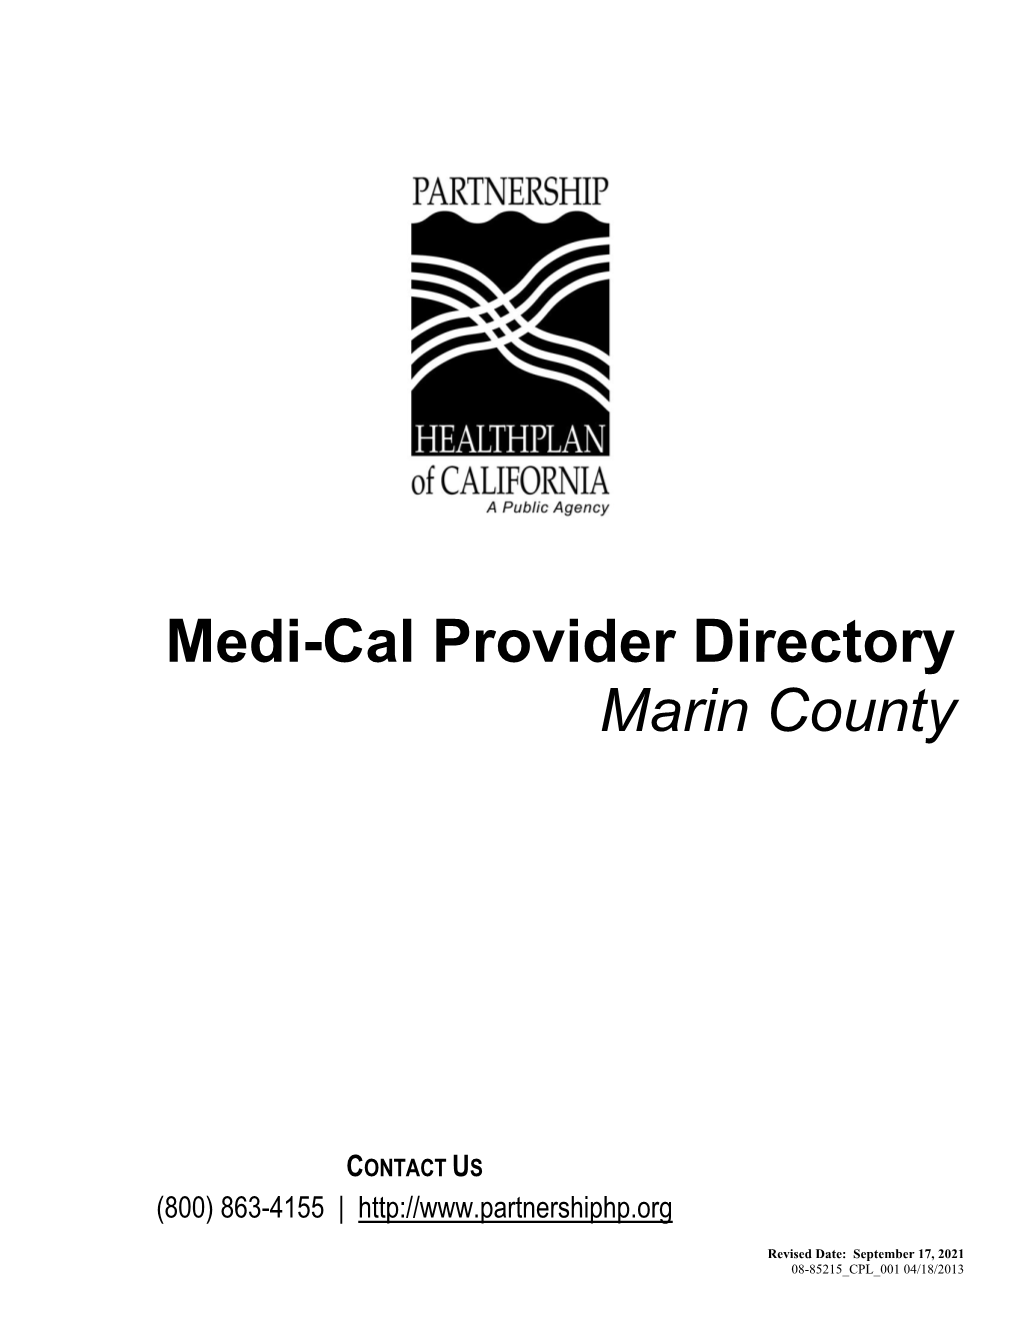 Marin County Medi-Cal Provider Directory